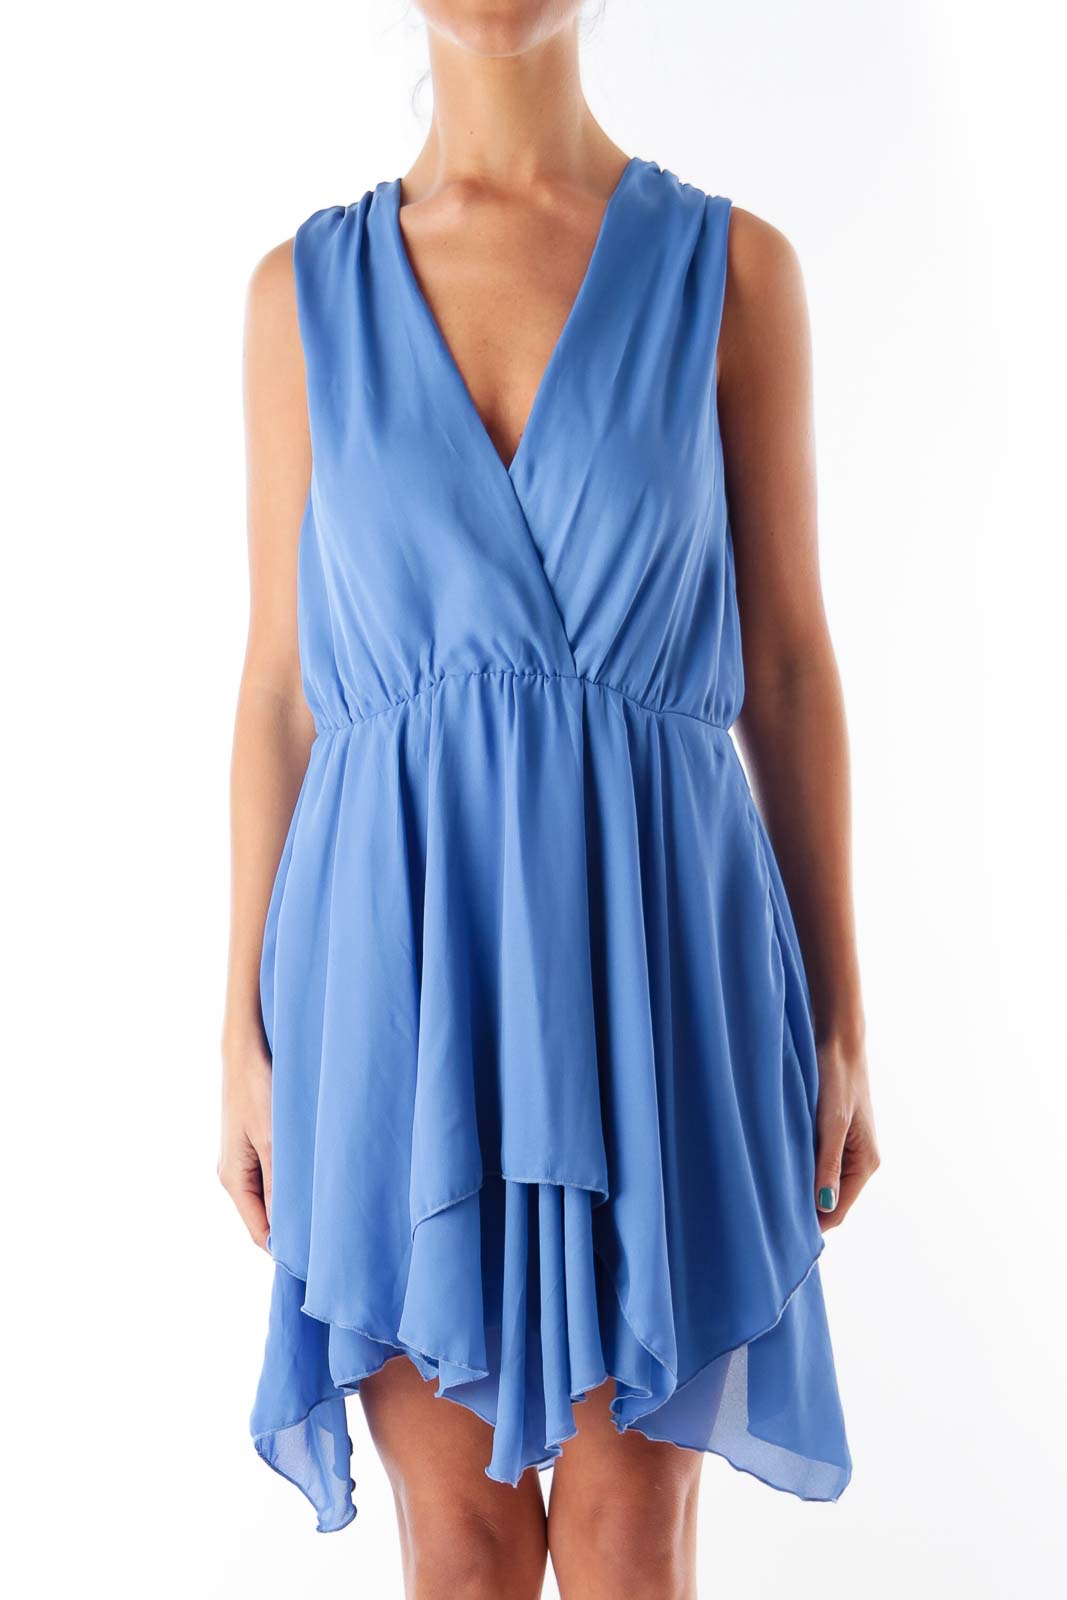 Blue Layer Mini Dress Front